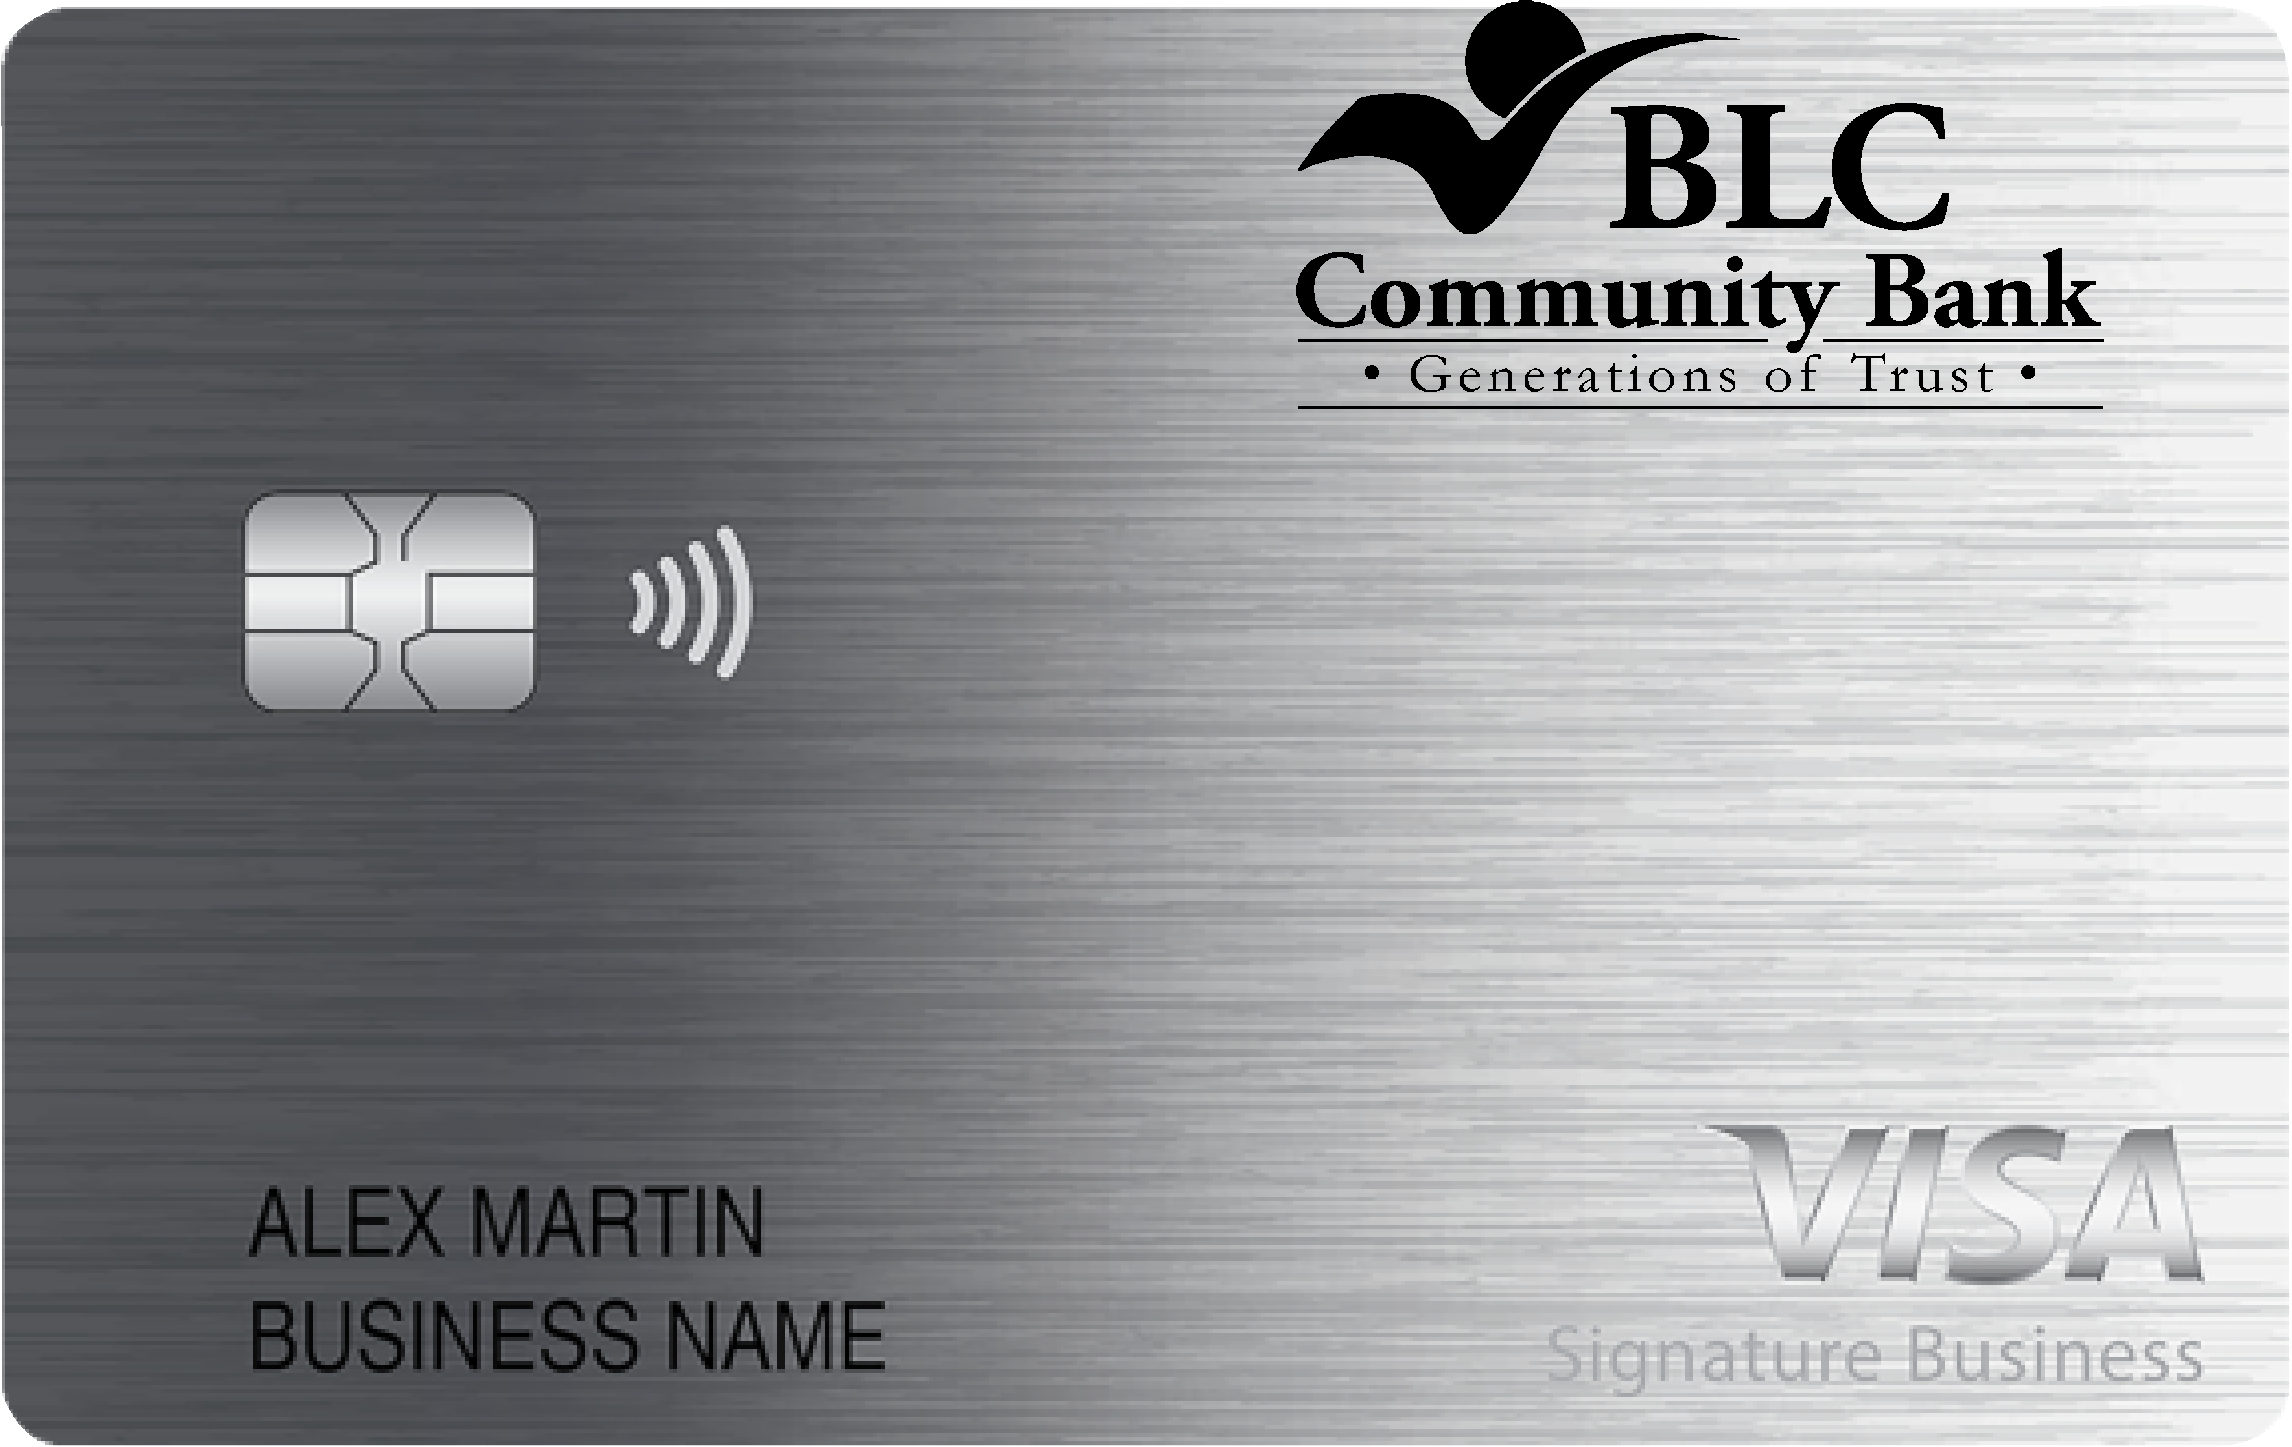 BLC Community Bank Smart Business Rewards Card